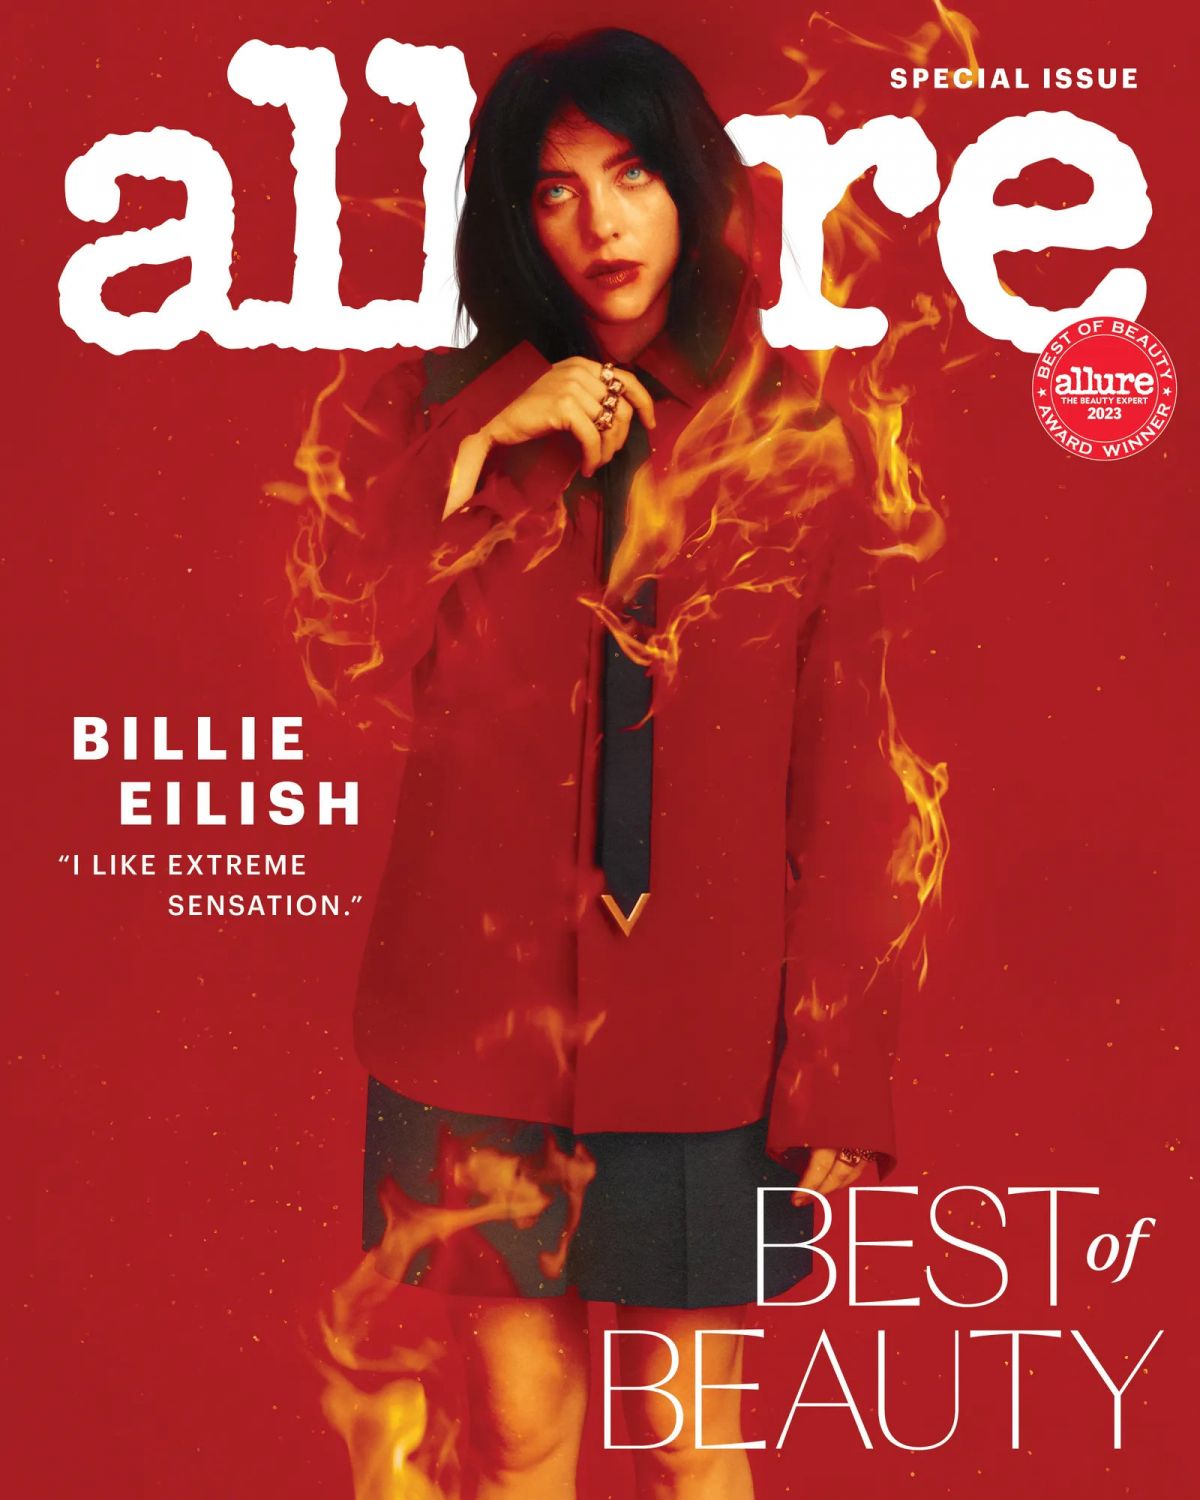 BILLIE EILISH for Allure Magazine Special Issue The 2023 Allure Best